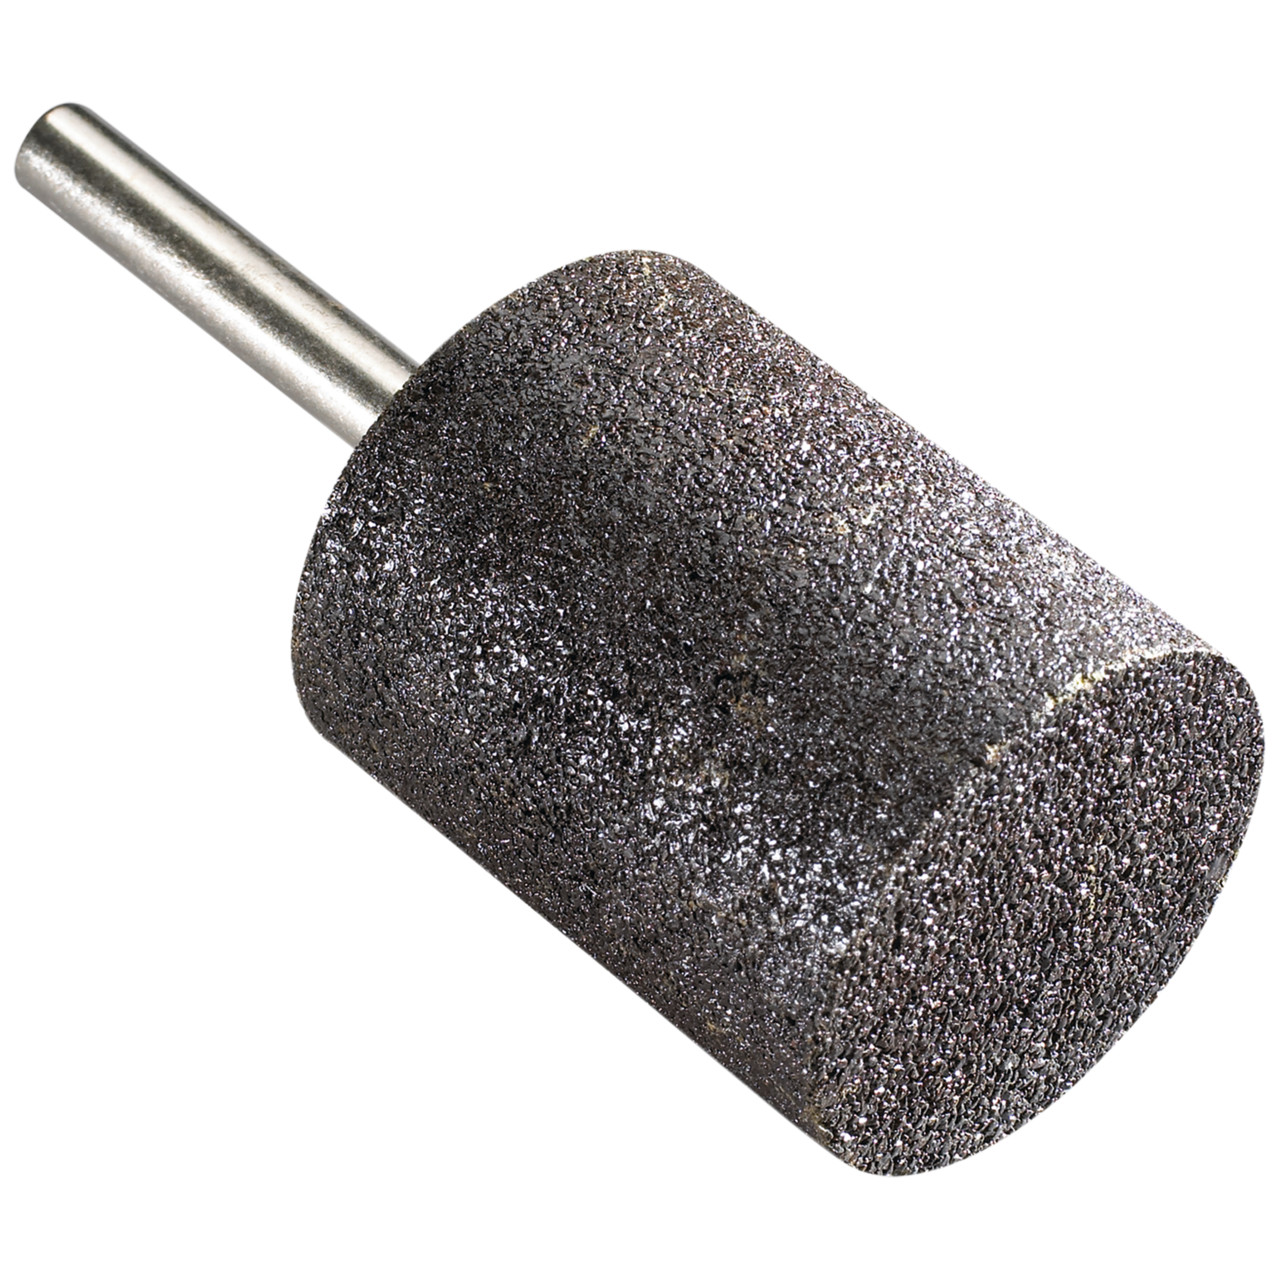 Tyrolit Punti montati in resina DxT-SxL 40x6-6x40 Per ghisa, forma: 52W - cilindro (punto montato), Art. 21233